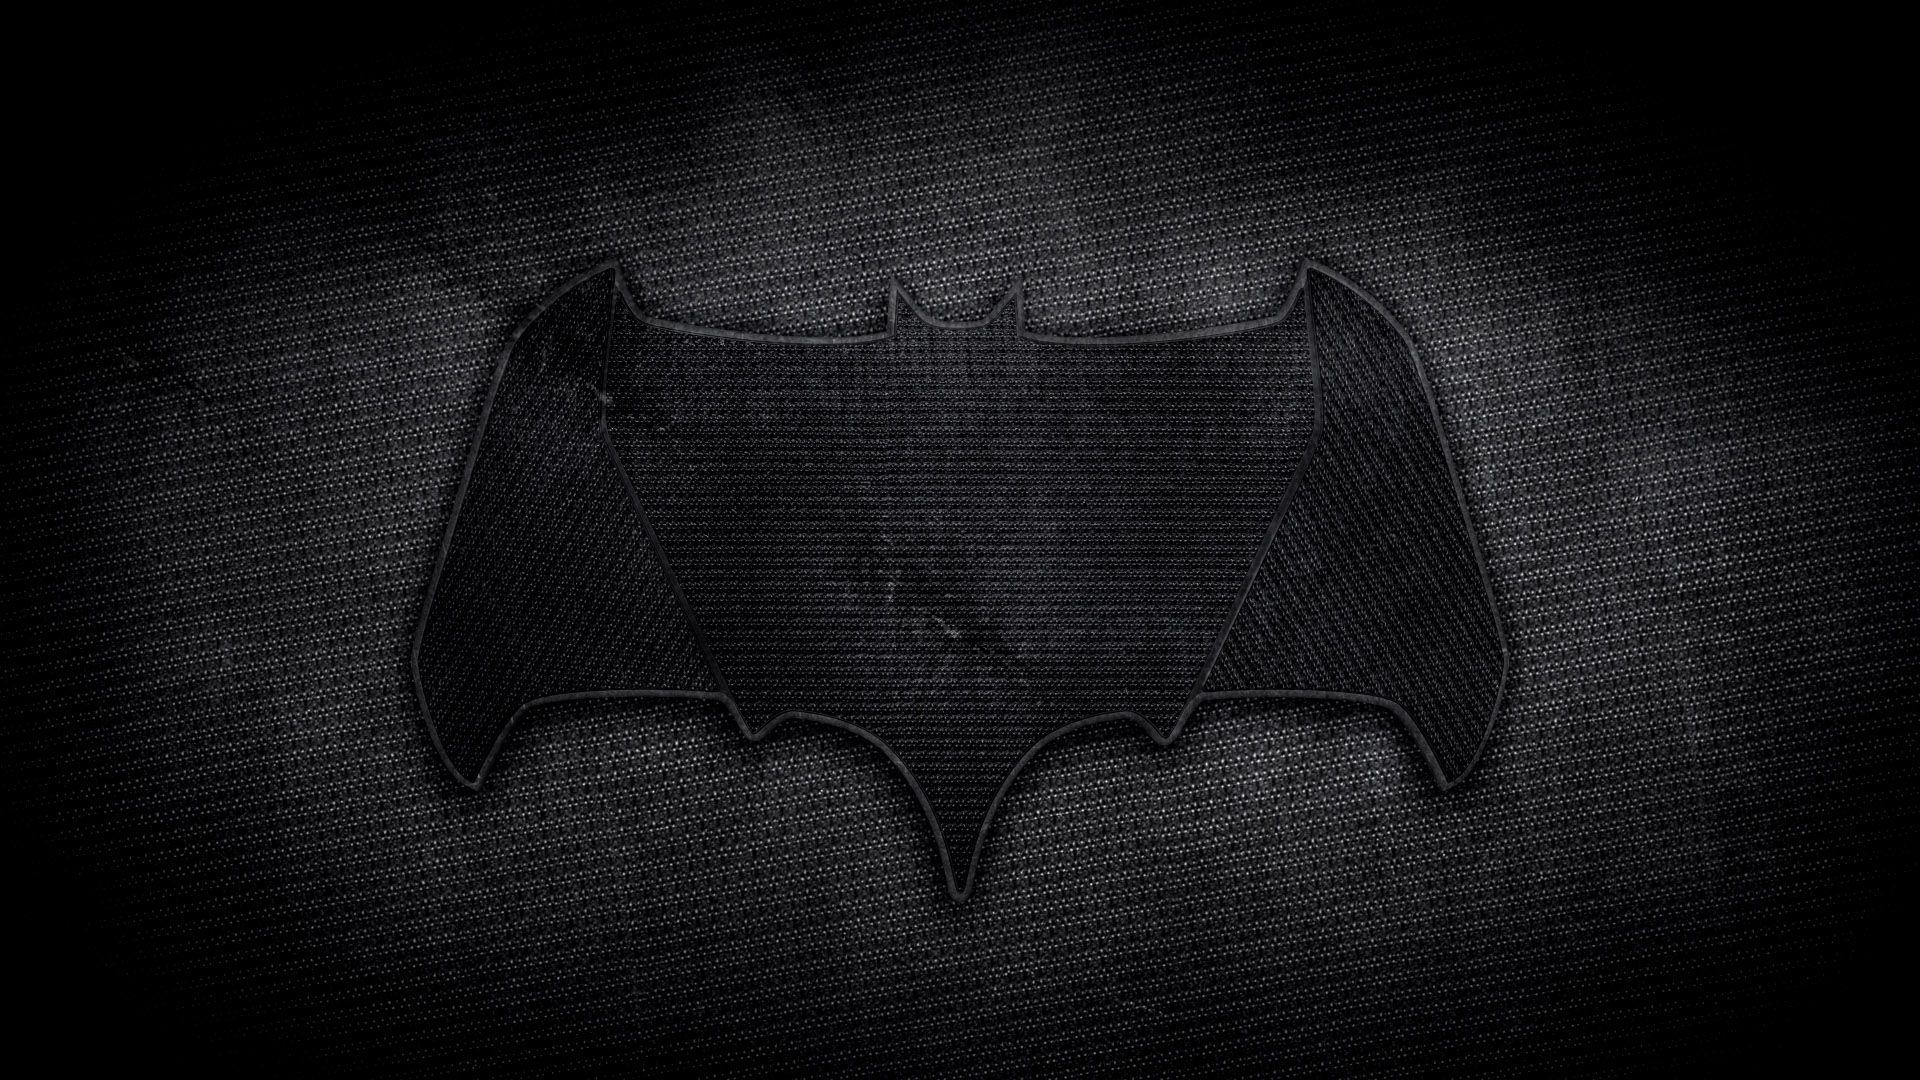 Superman vs Batman Batman Logo - 50 Batman Logo wallpapers For Free Download (HD 1080p)